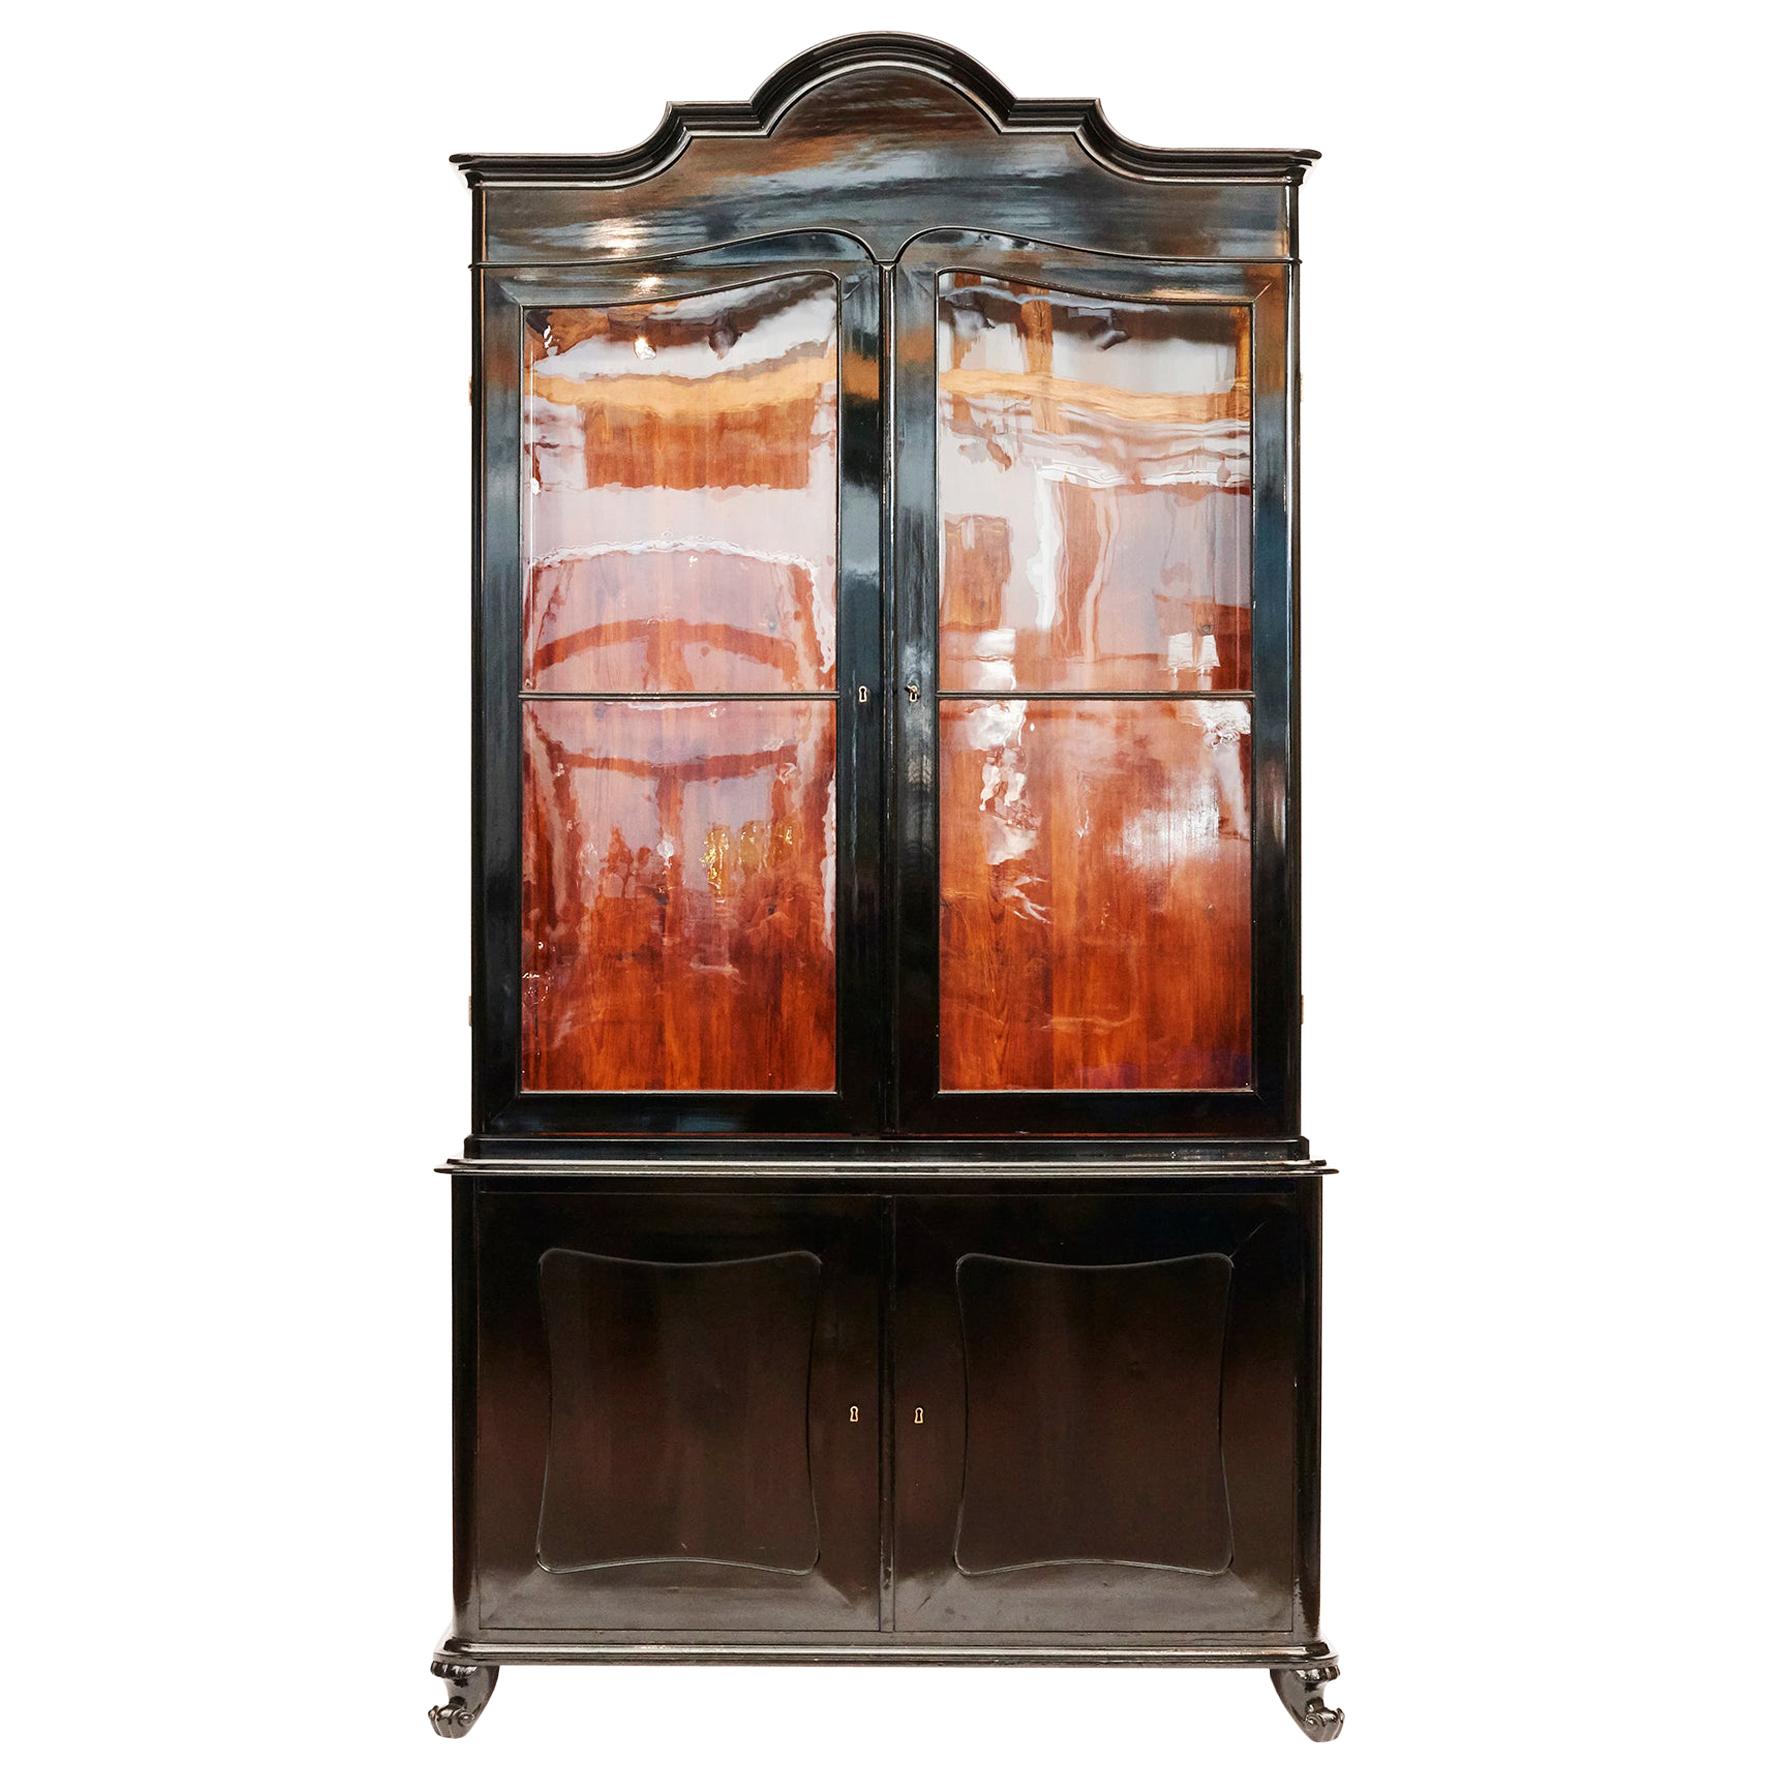 Danish Glass Cabinet, Black Polished Mahogany, circa 1840-1860